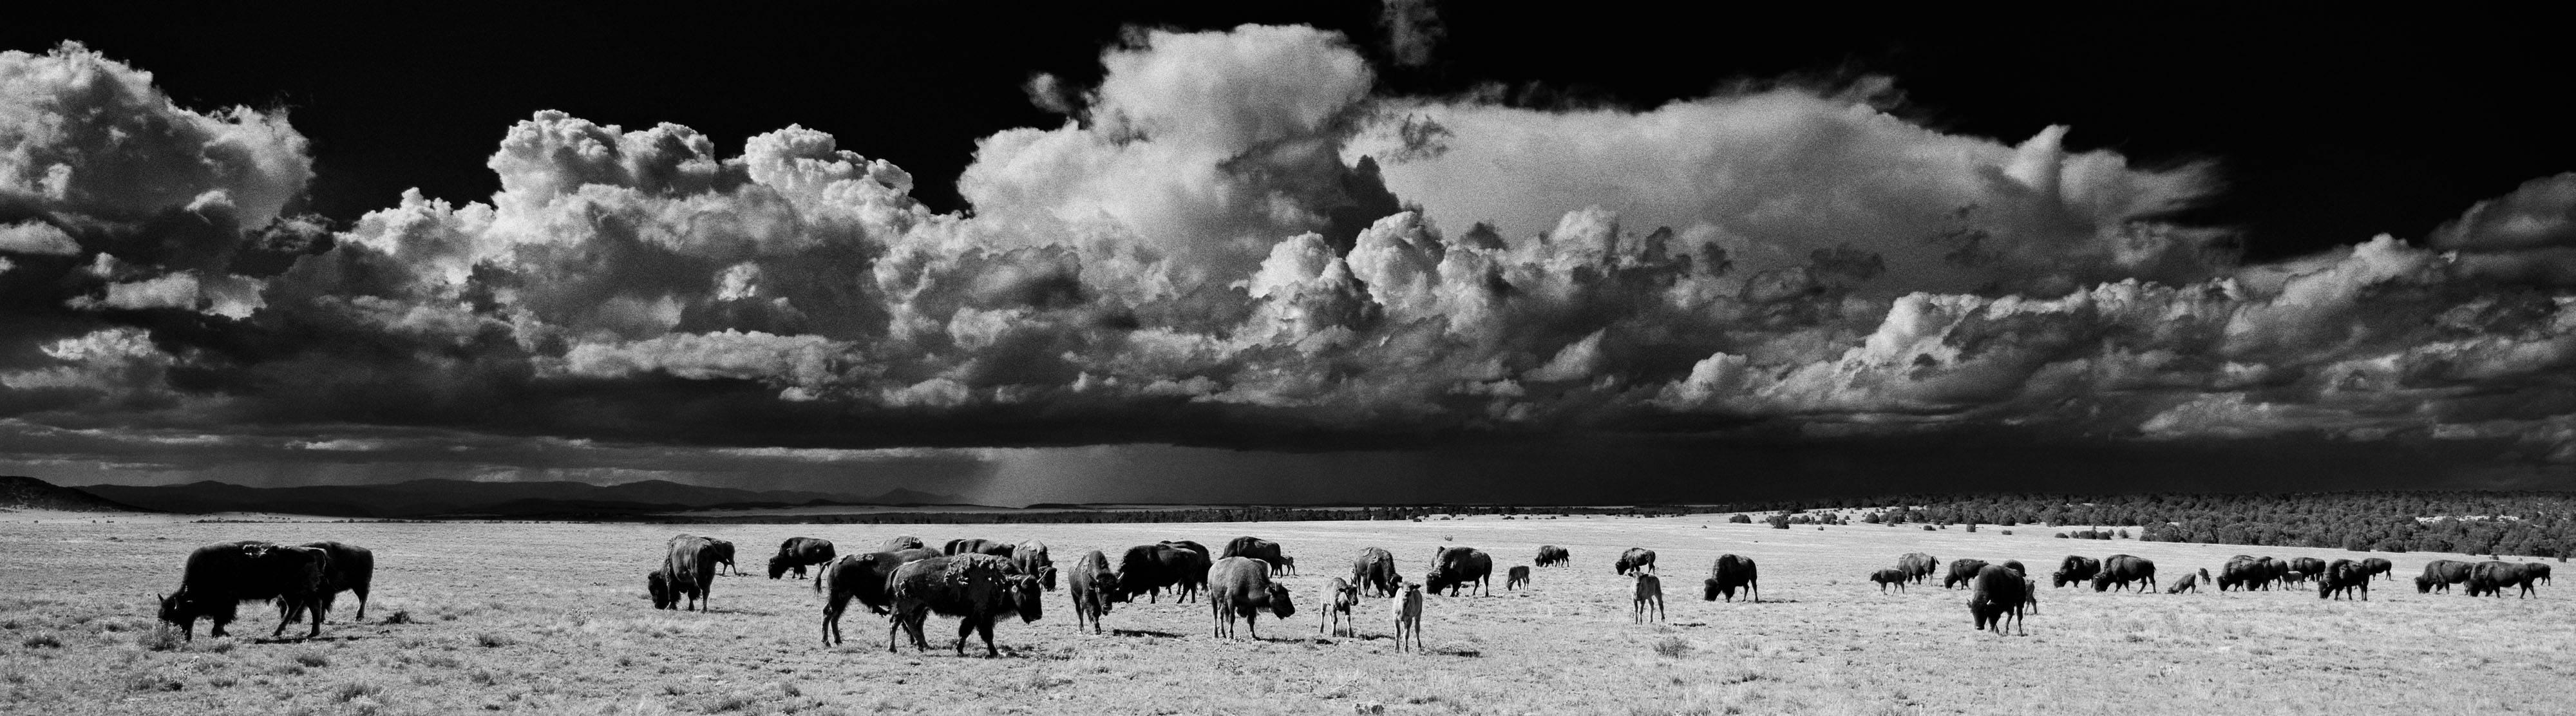 Landschaftsfotografie Panoramik-Serie: 'Buffalo'